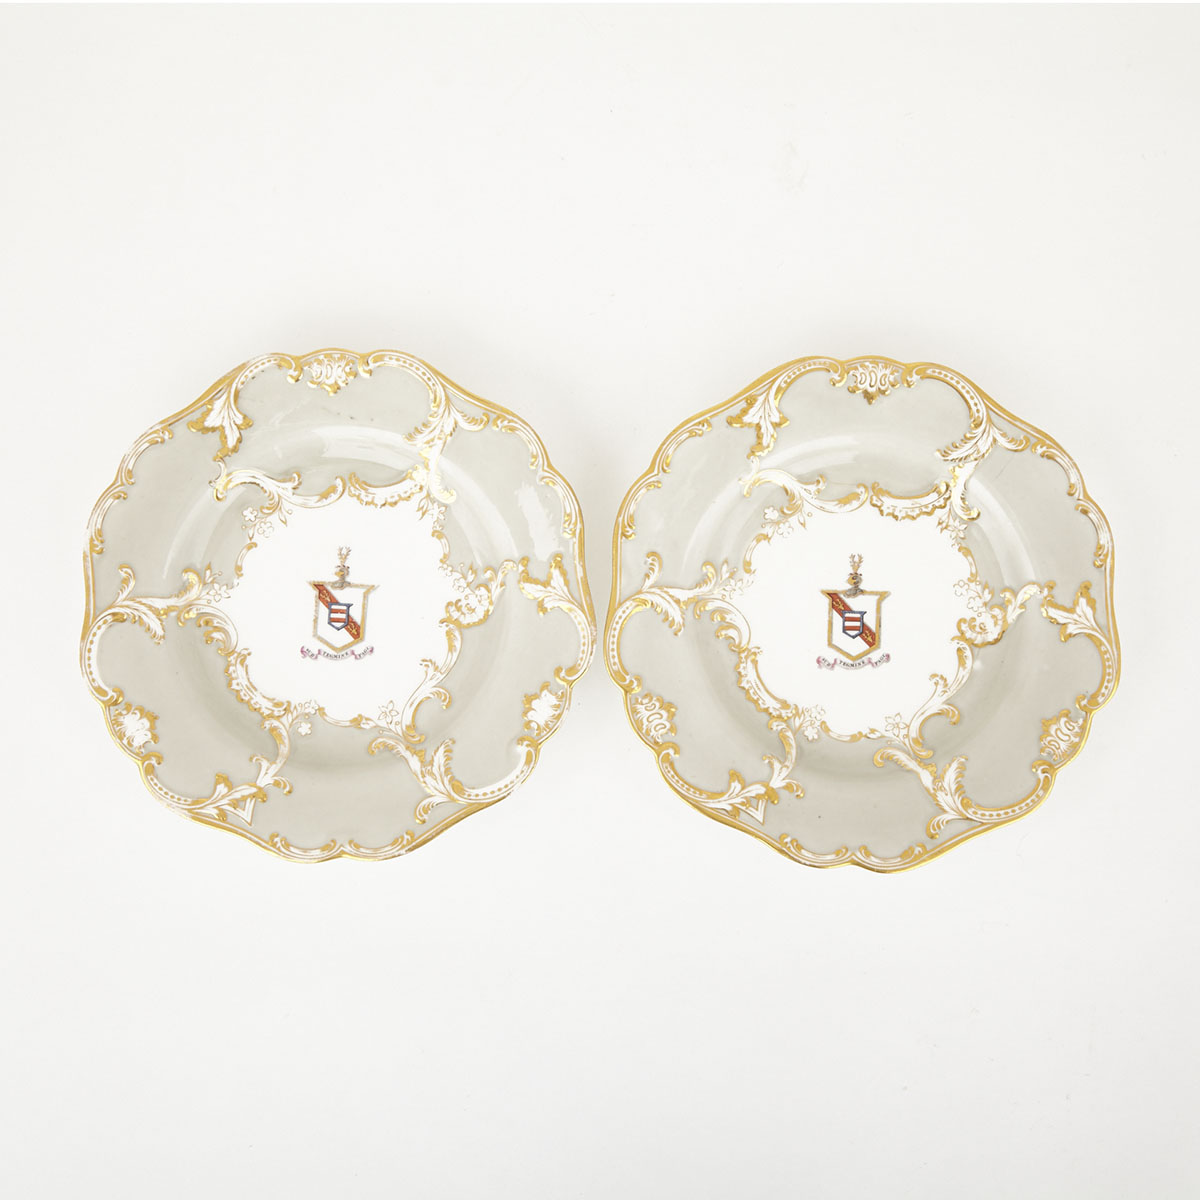 Pair of Minton Armorial Plates, c.1830-40